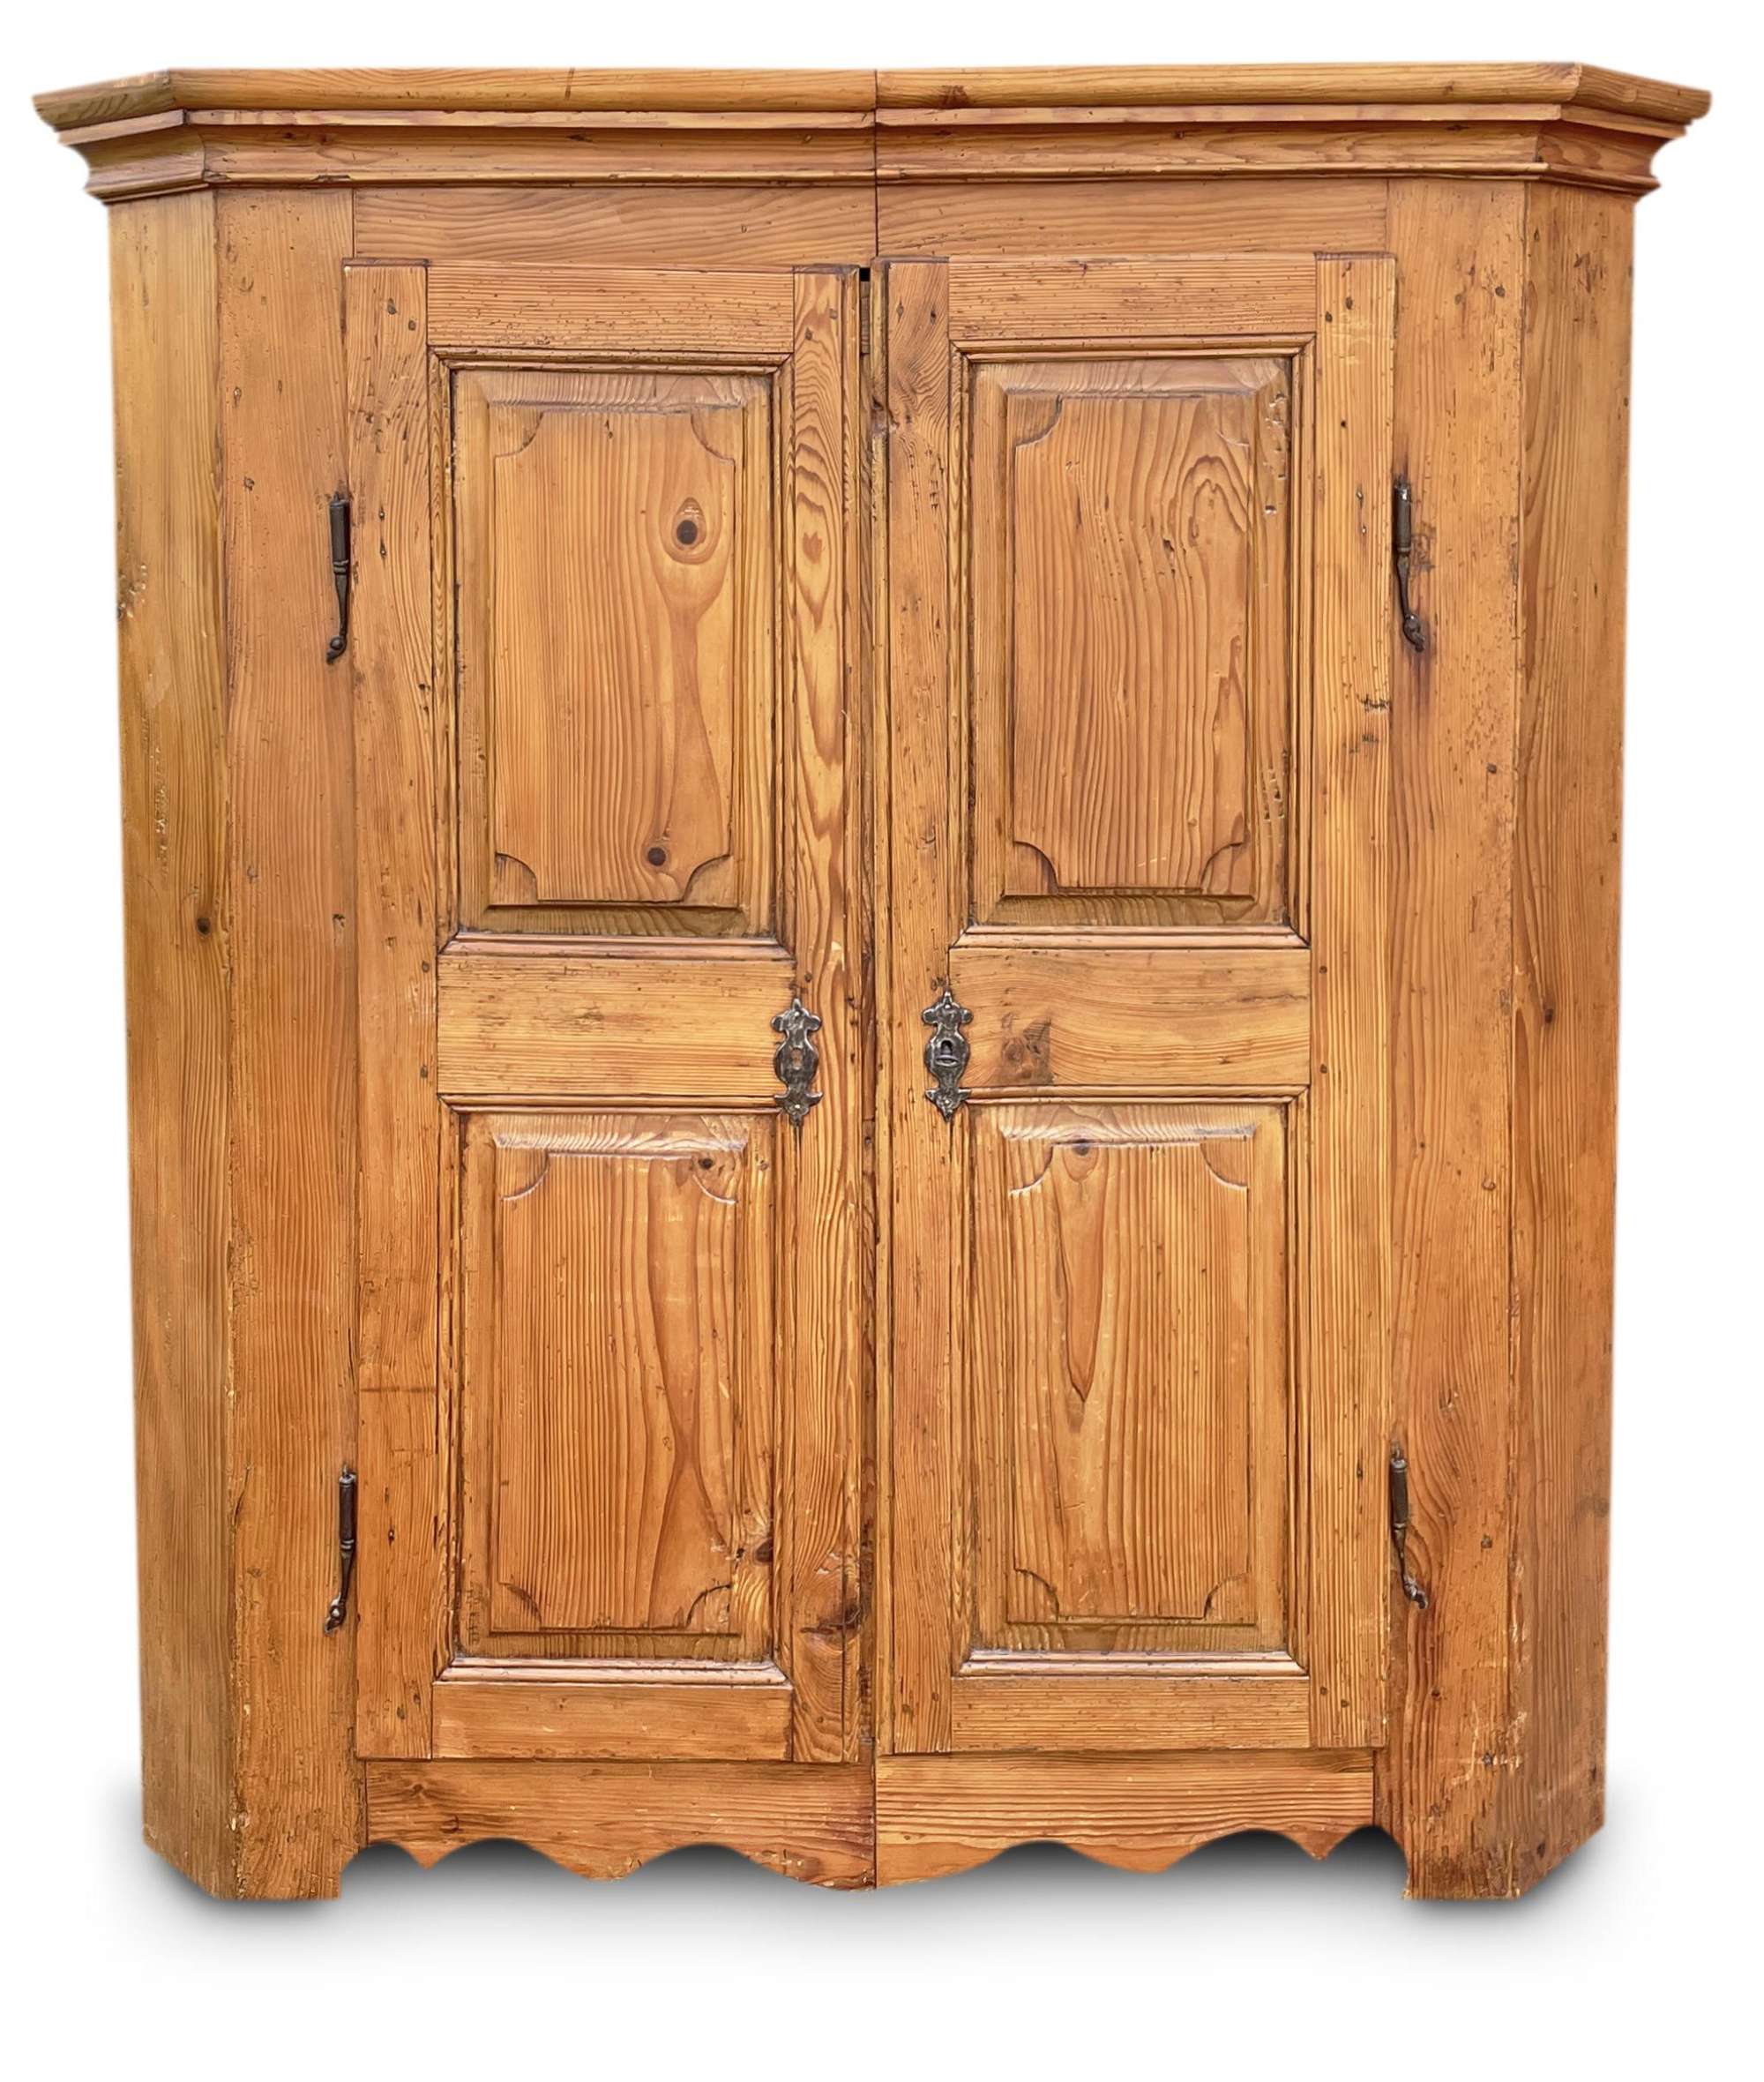 Two-door fir wardrobe 18th Century